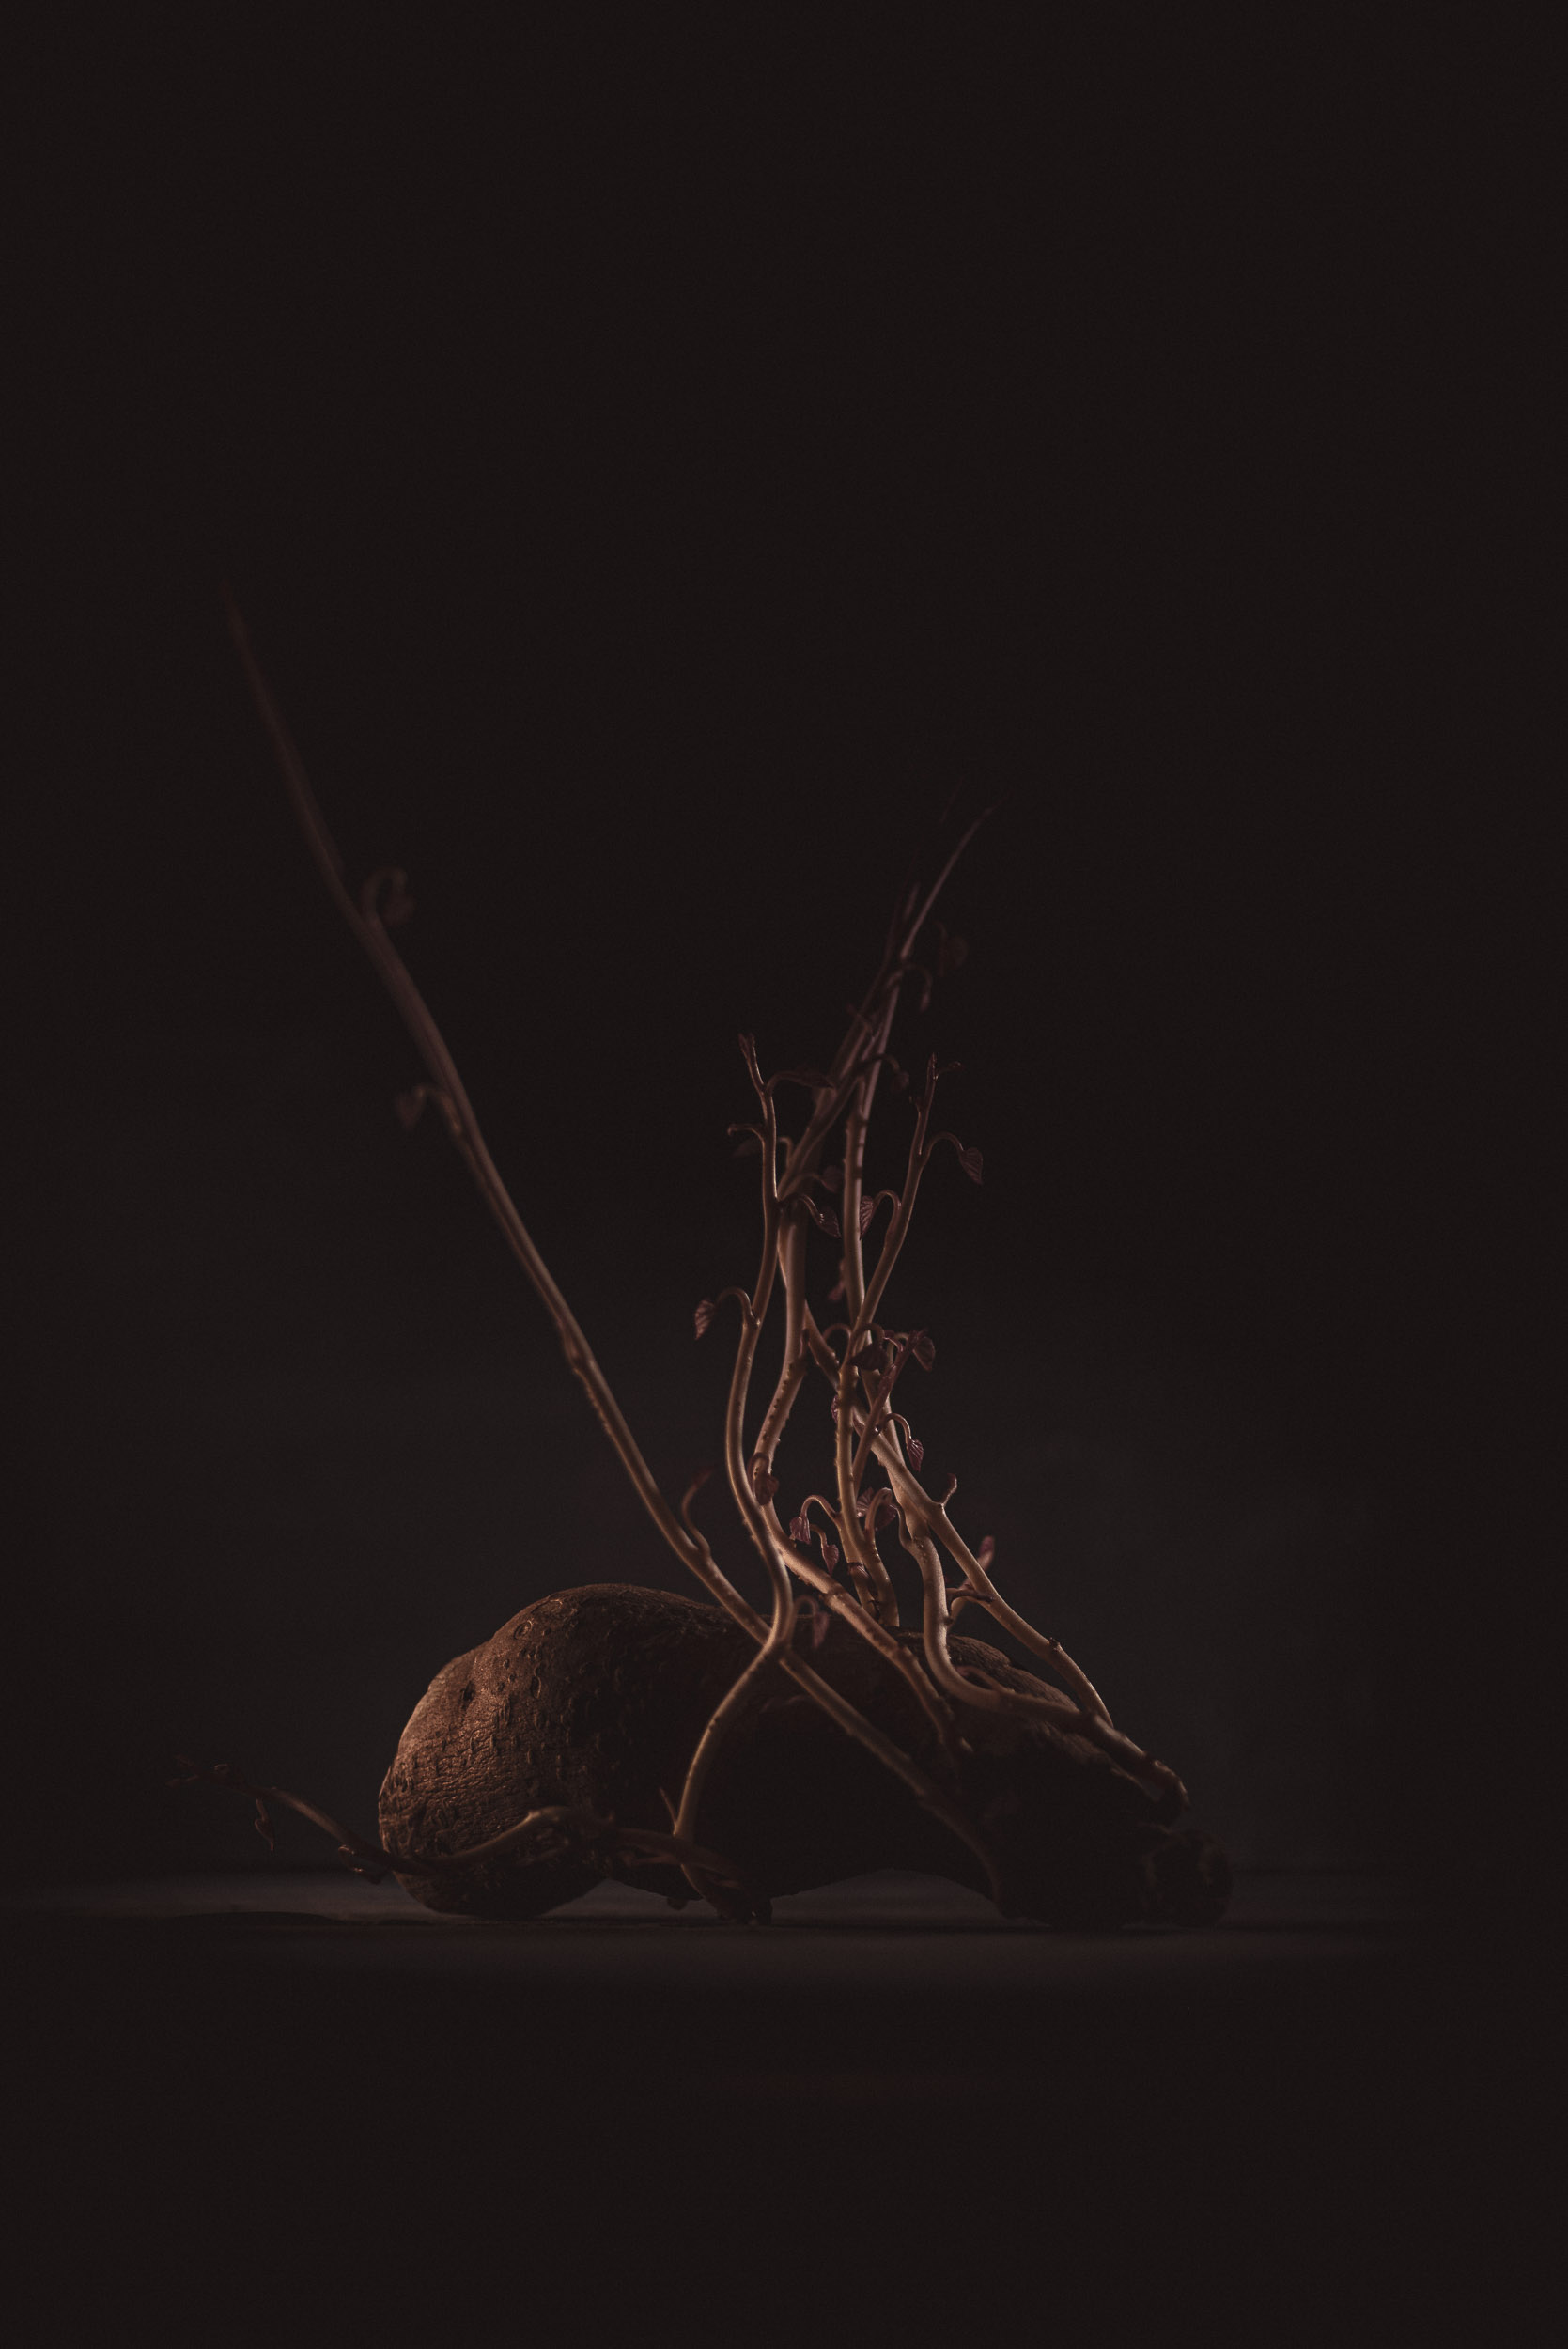 Product photography: Low light experiments with a sweet potato / Photos © 2022 Bert Blondeel